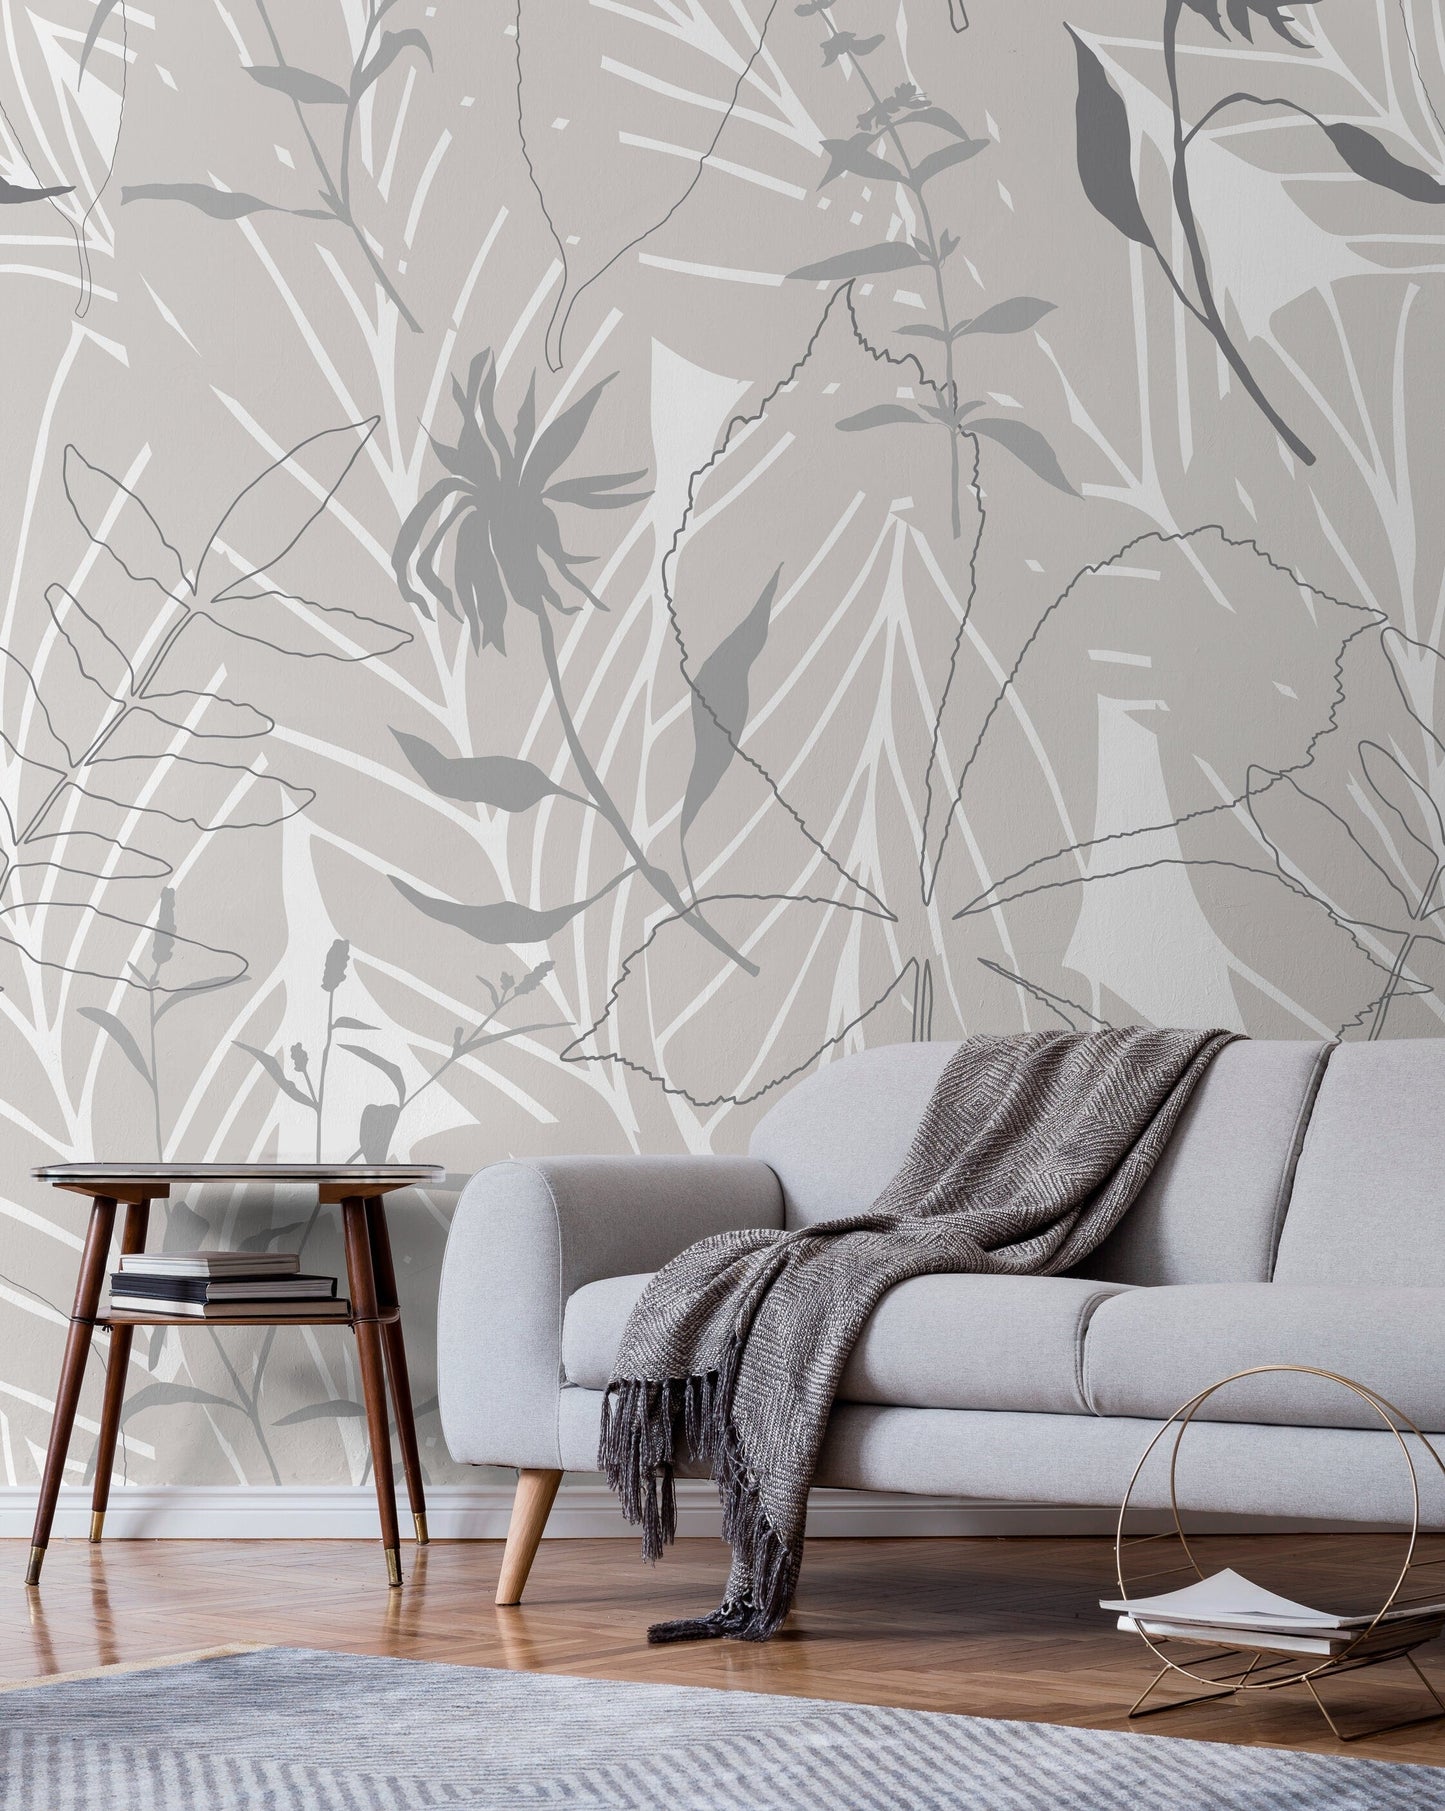 Removable Wallpaper, Scandinavian Wallpaper, Temporary Wallpaper, Minimalistic Wallpaper, Peel and Stick Wallpaper, Wall Paper, Boho - B441